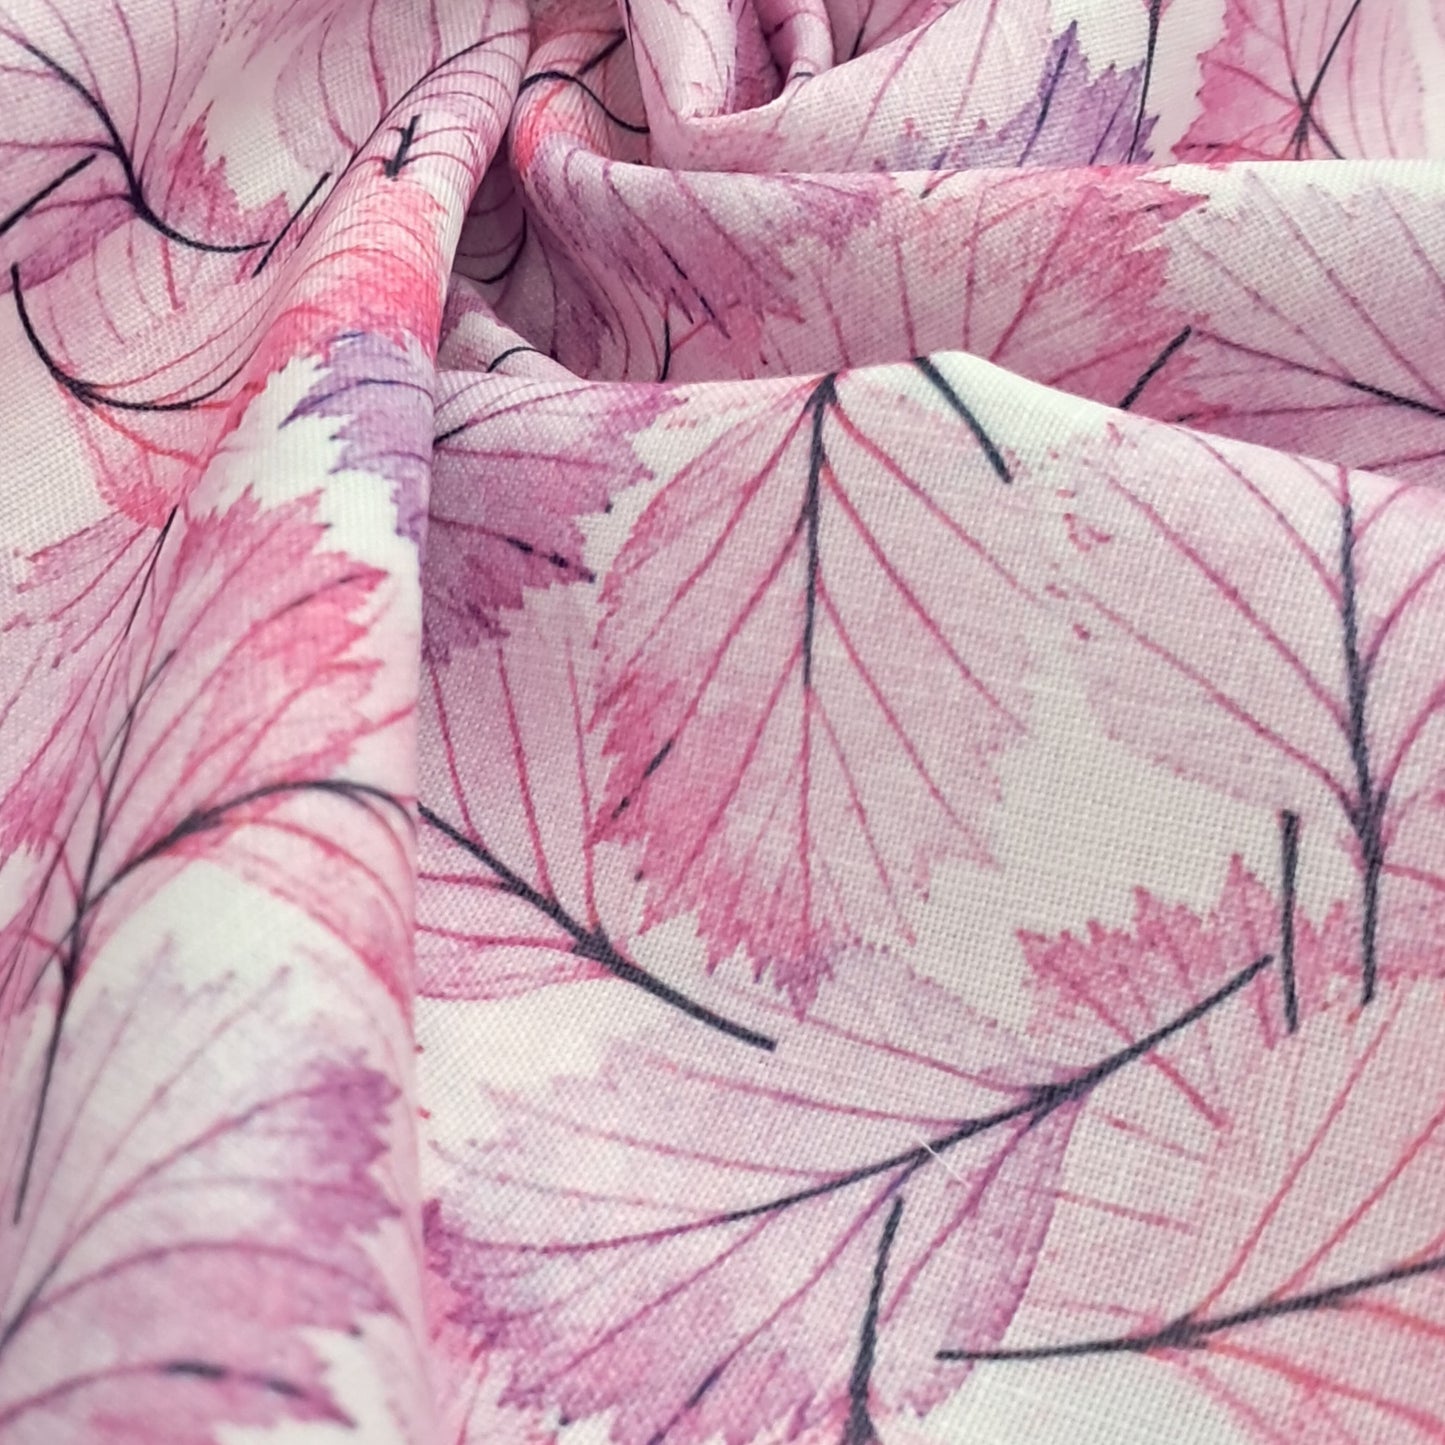 Linen Cotton Fabric in Colourful Leafy Print